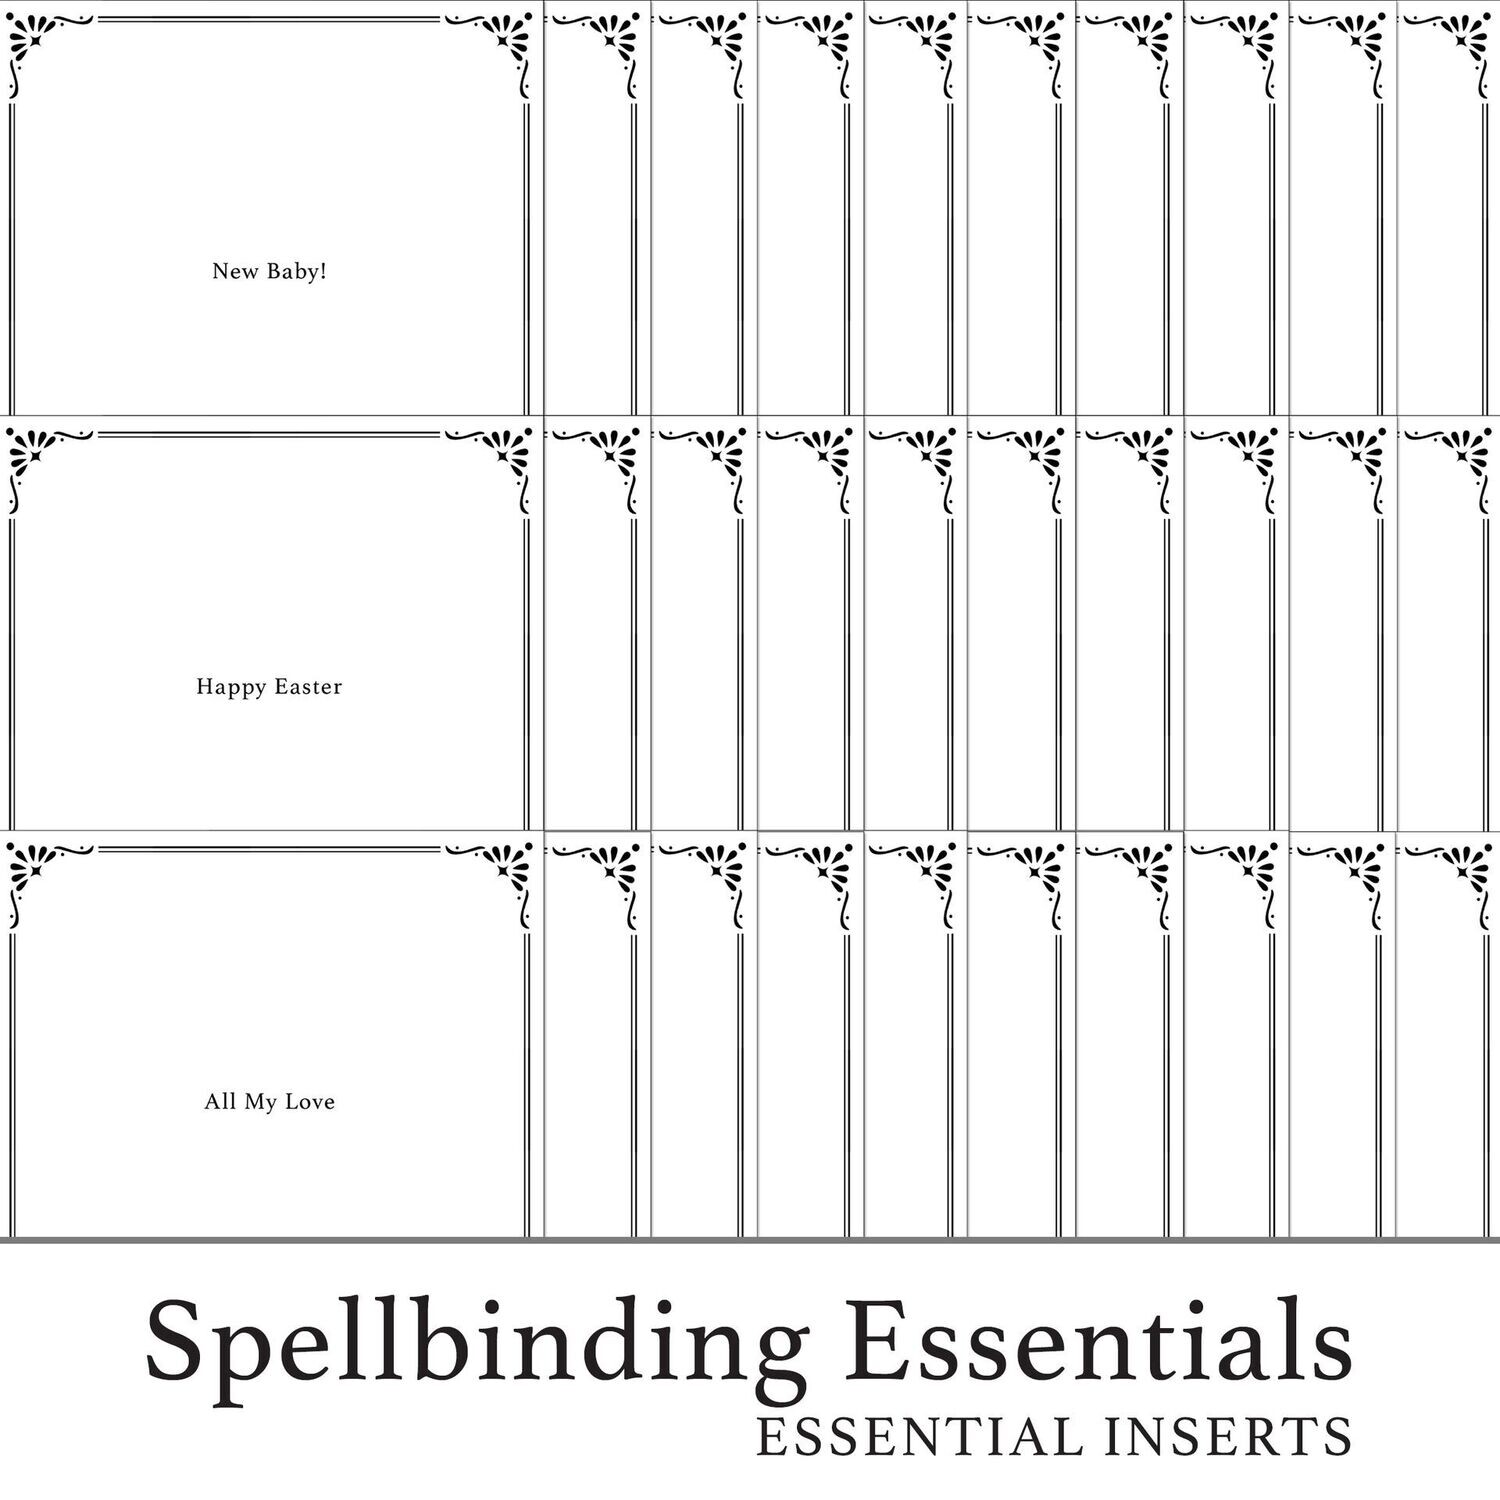 Spellbinding Essentials - 240 Essential Inserts